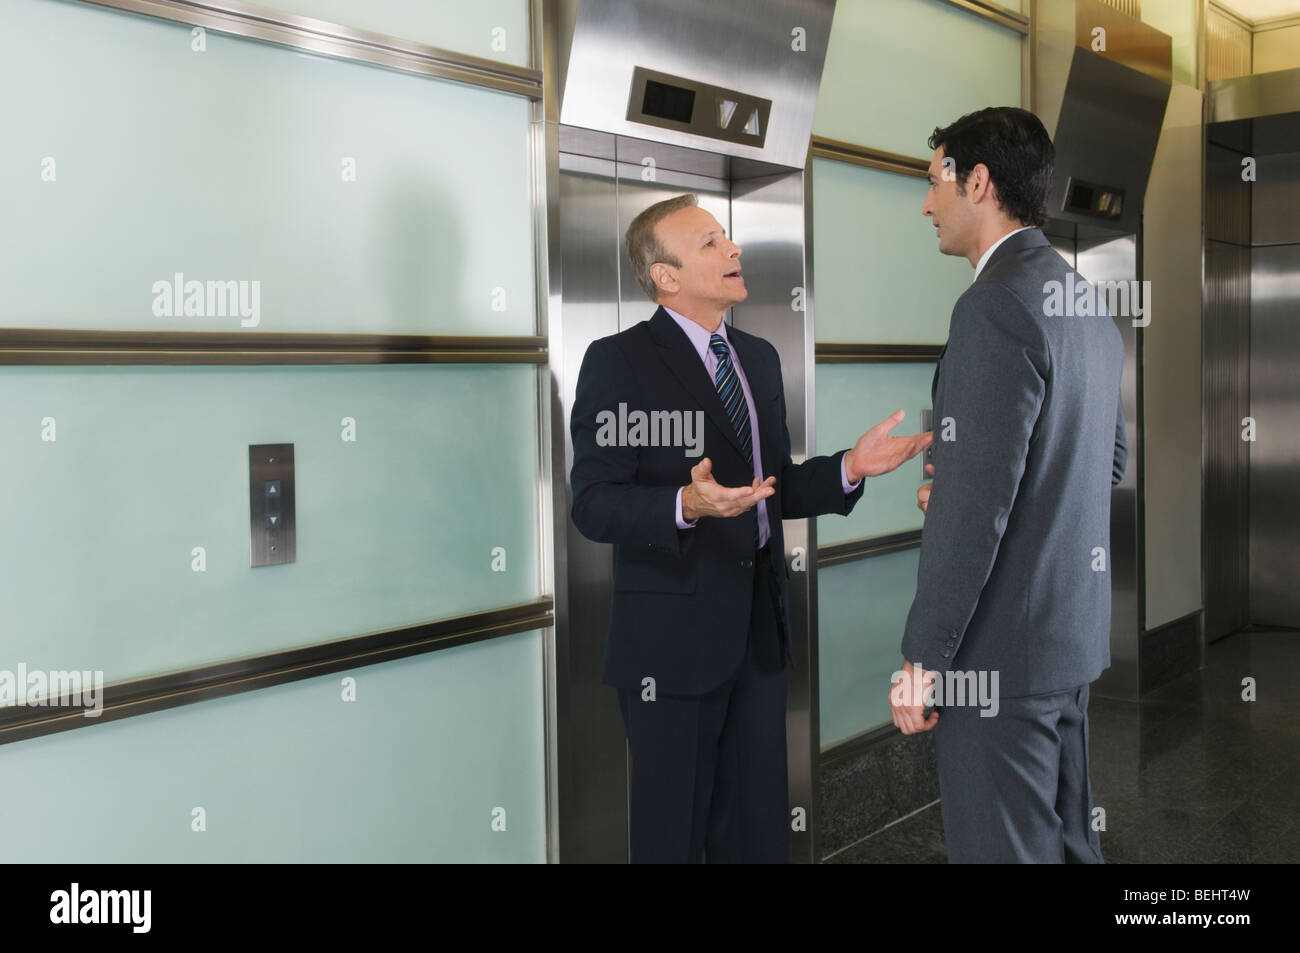 Businessmen discussing in a corridor Stock Photo